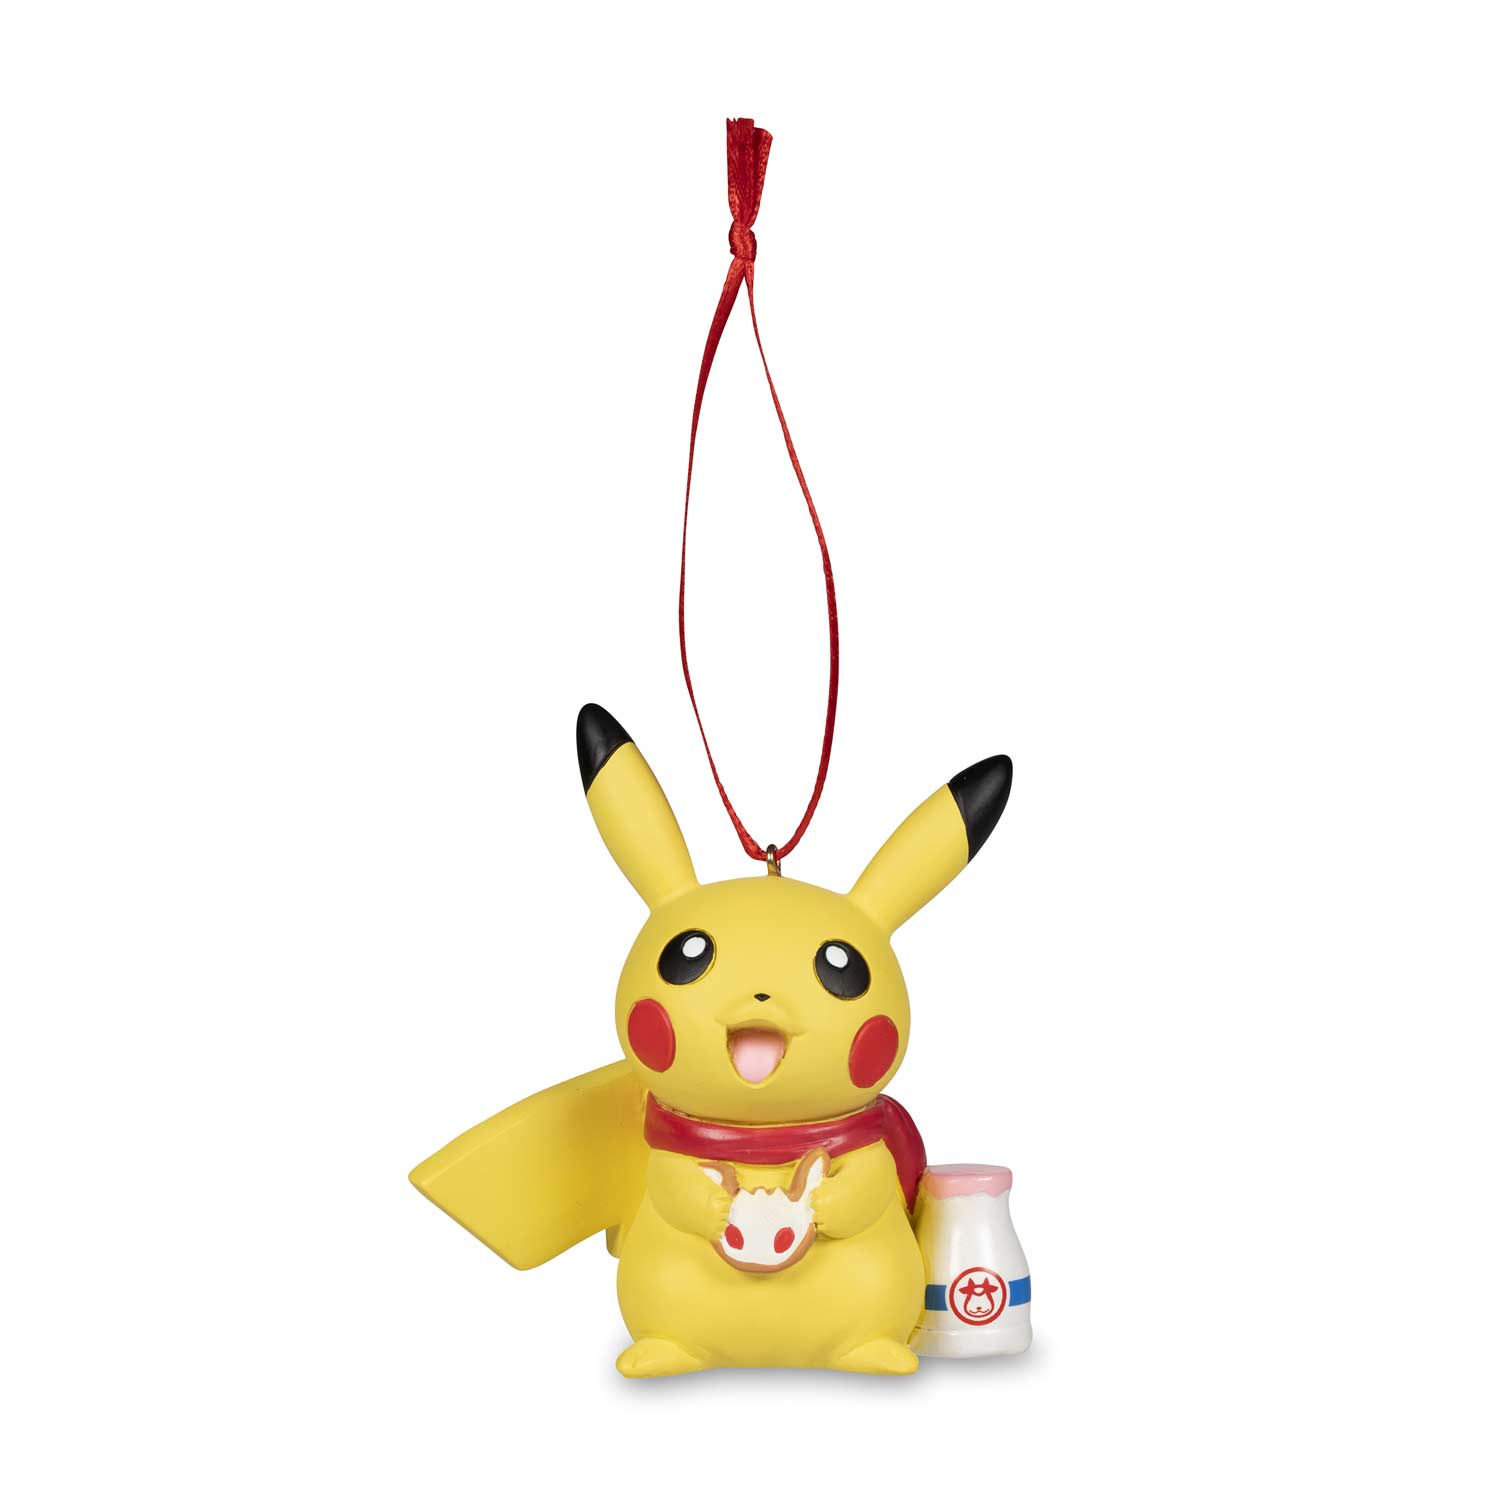 Details about   Pokemon Center 2020 Pikachu Brass Holiday Ornament > Brand New & UK Seller <. 